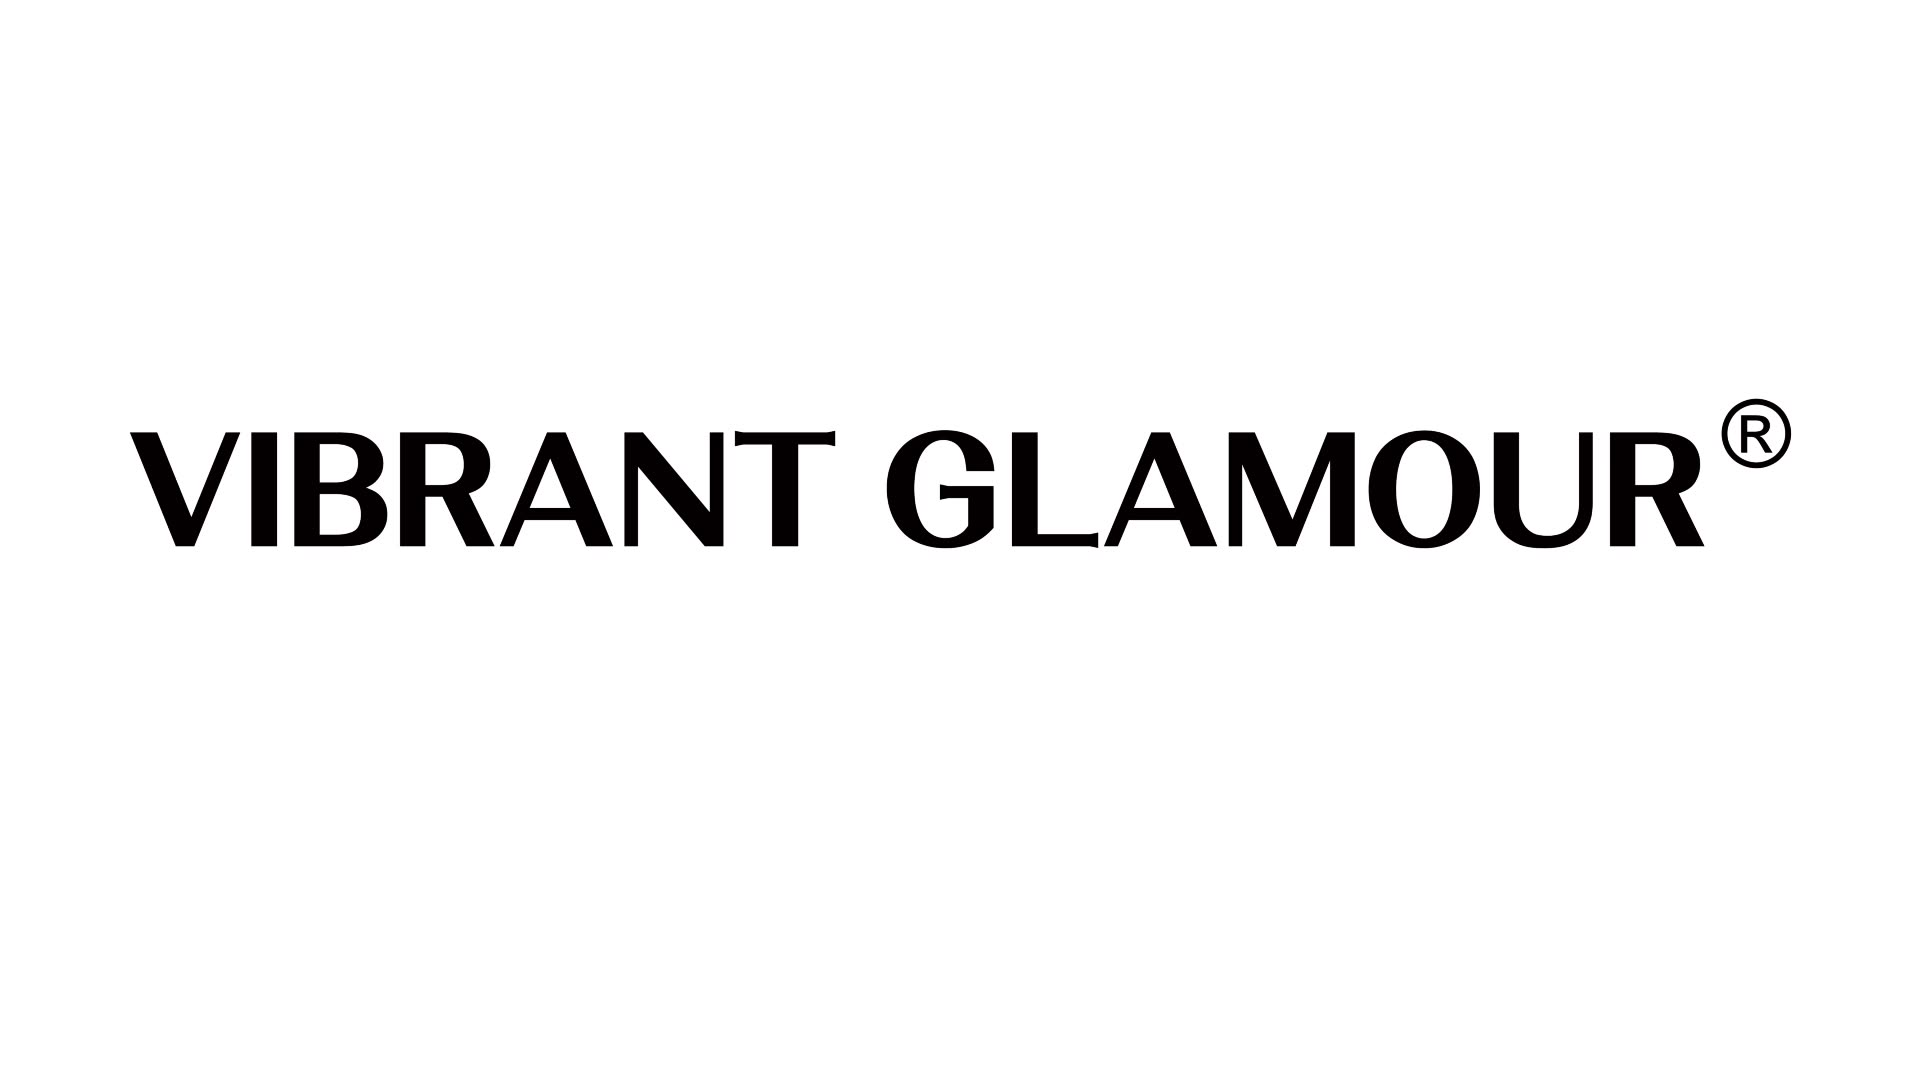 Glamour cream vibrant retinol VIBRANT GLAMOUR